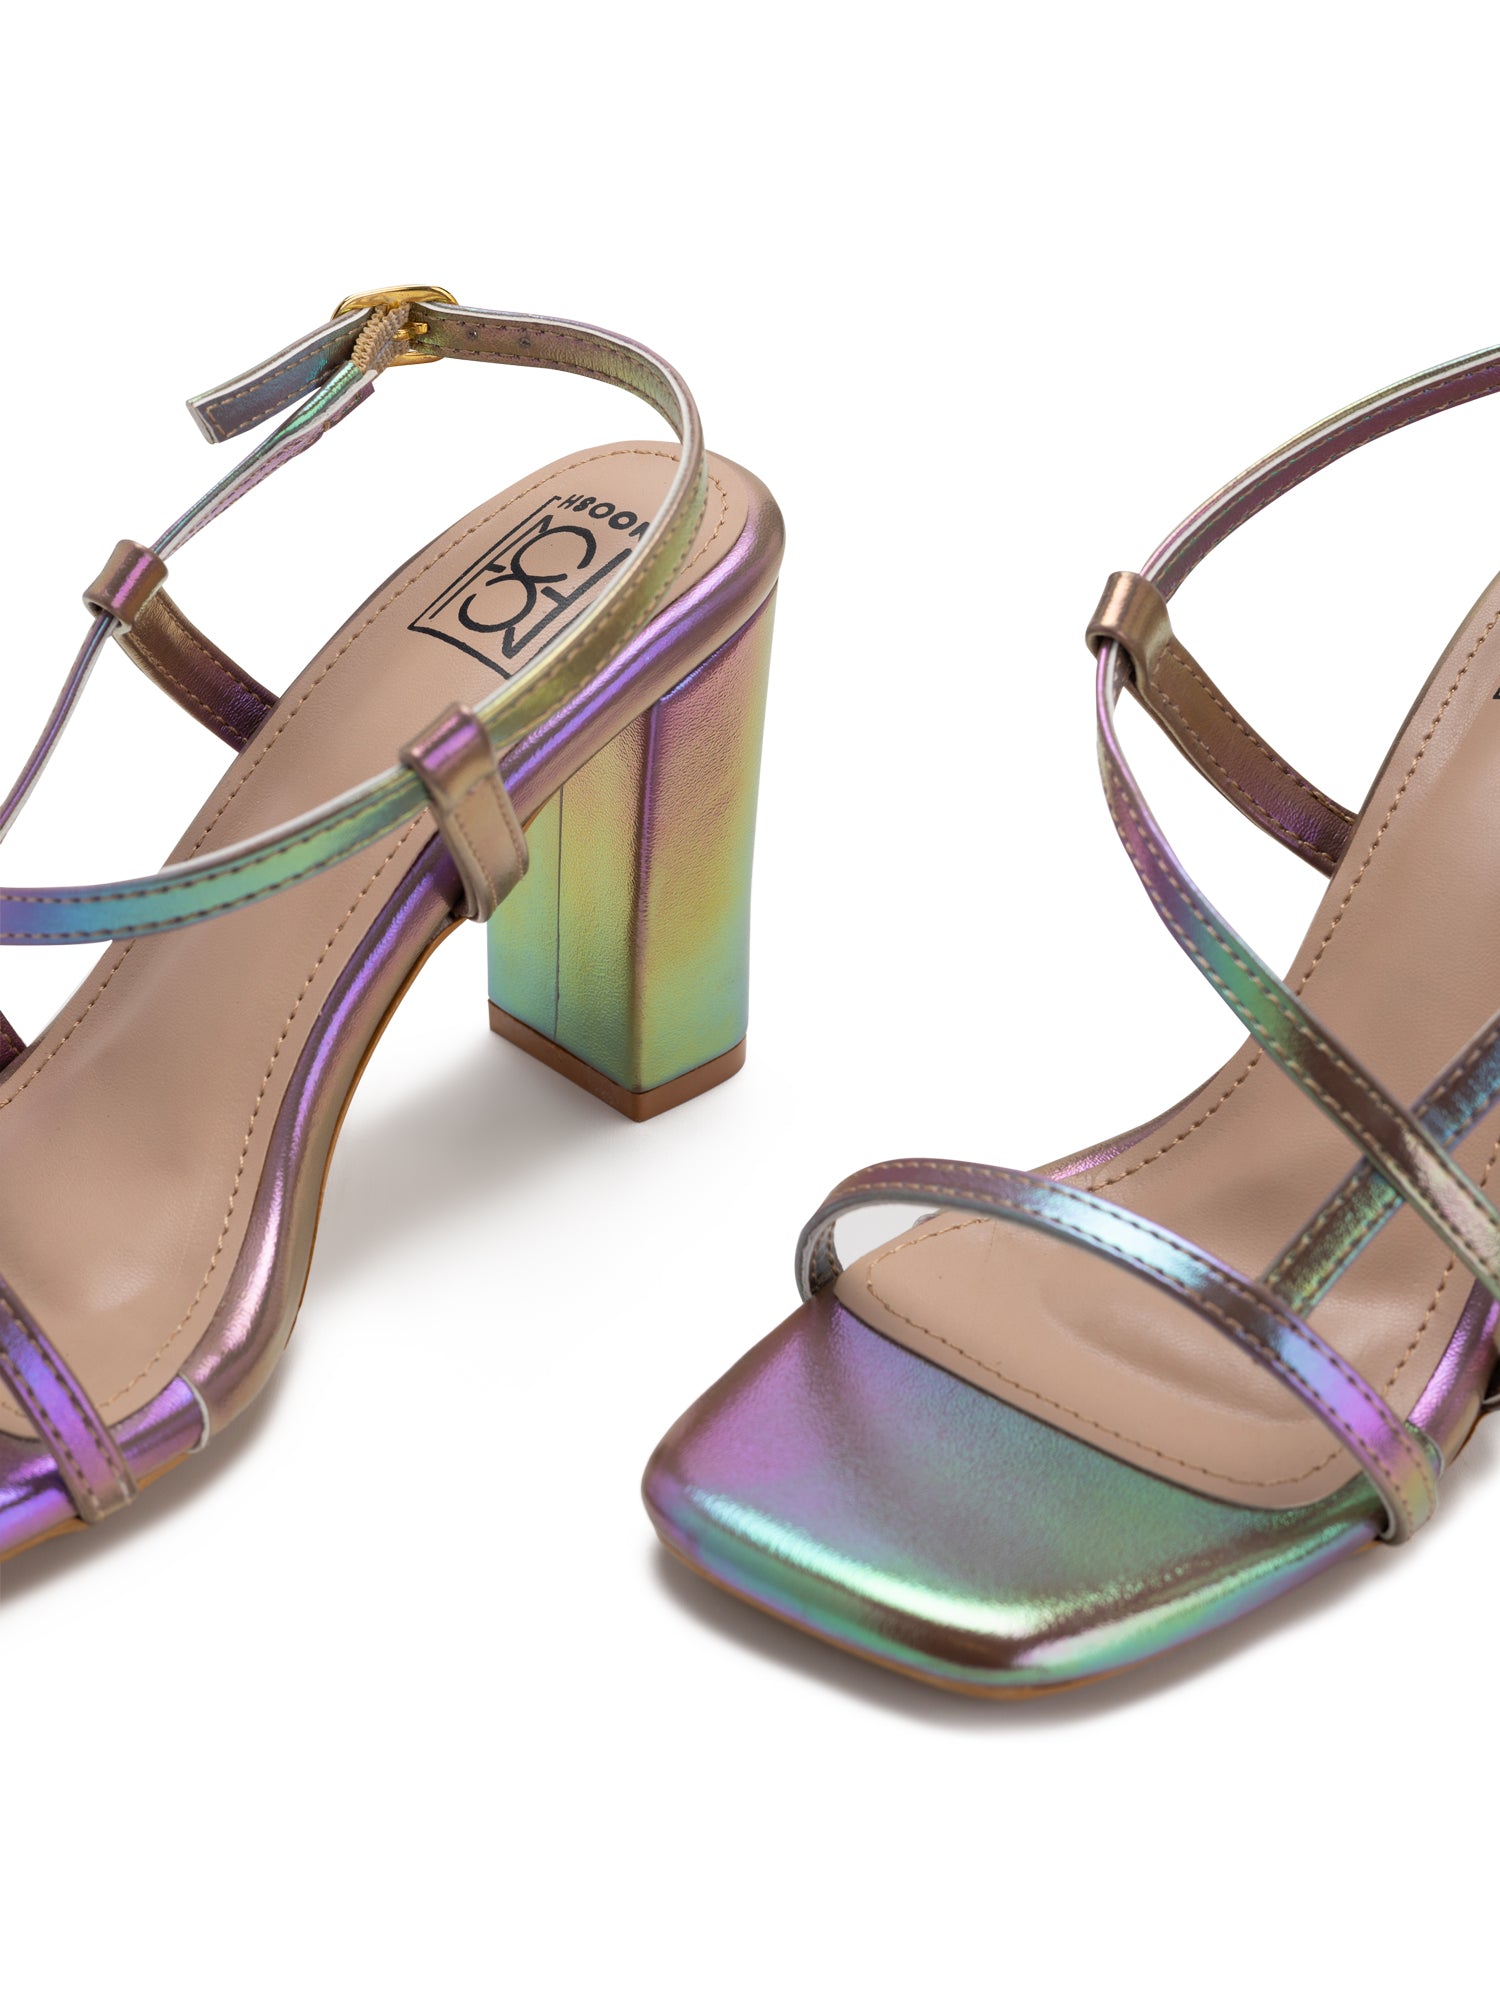 Kensie Kylee Vegan Rainbow Knotted Slip On Sandals Slippers Size 7 | eBay